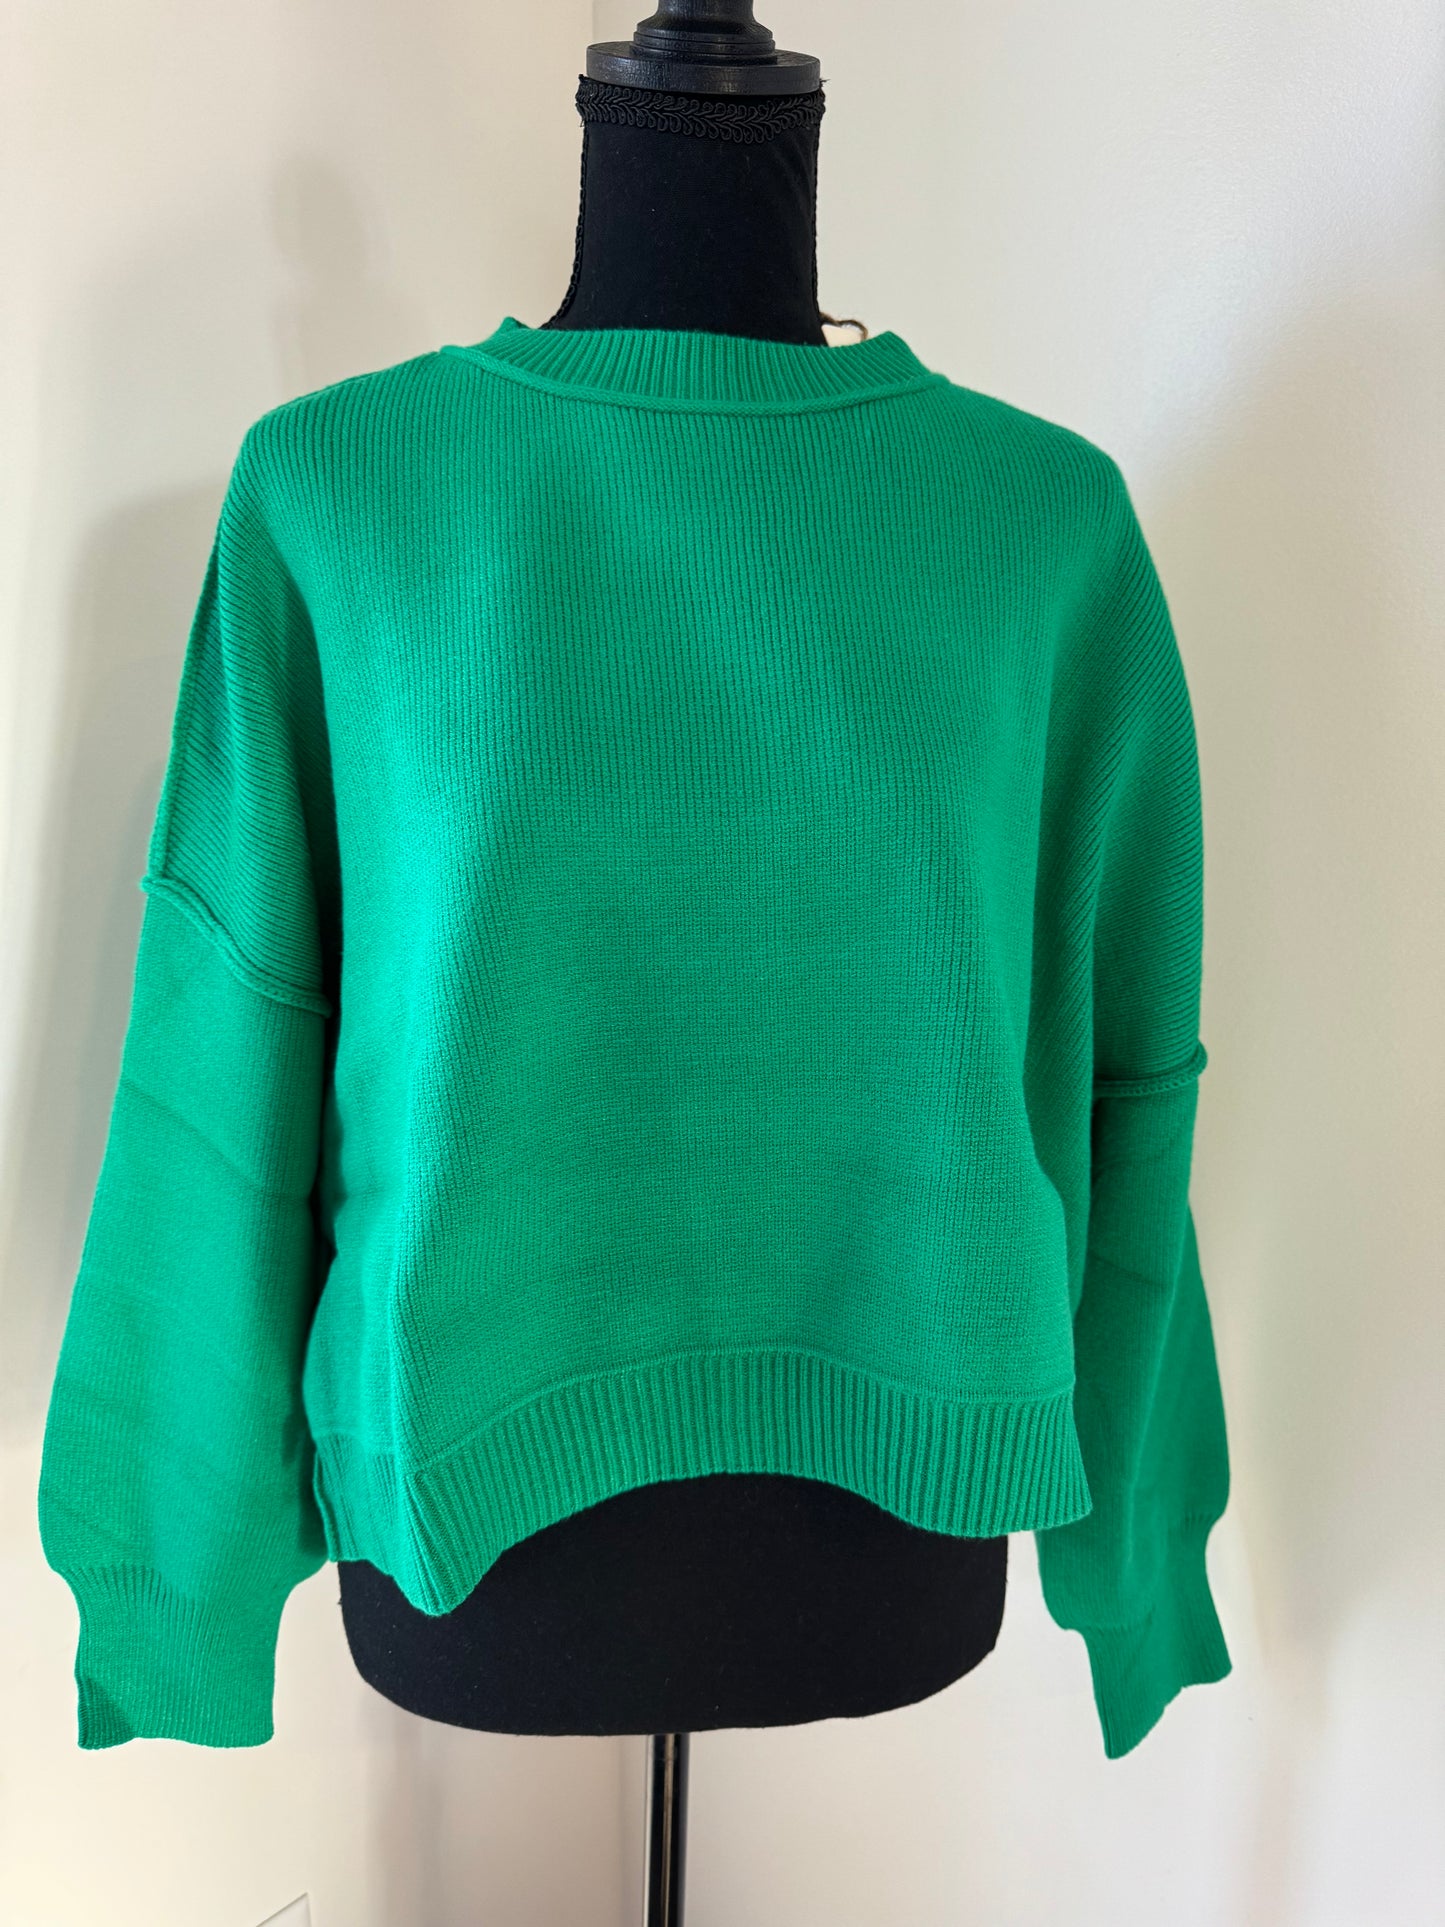 Follow the Emerald sweater